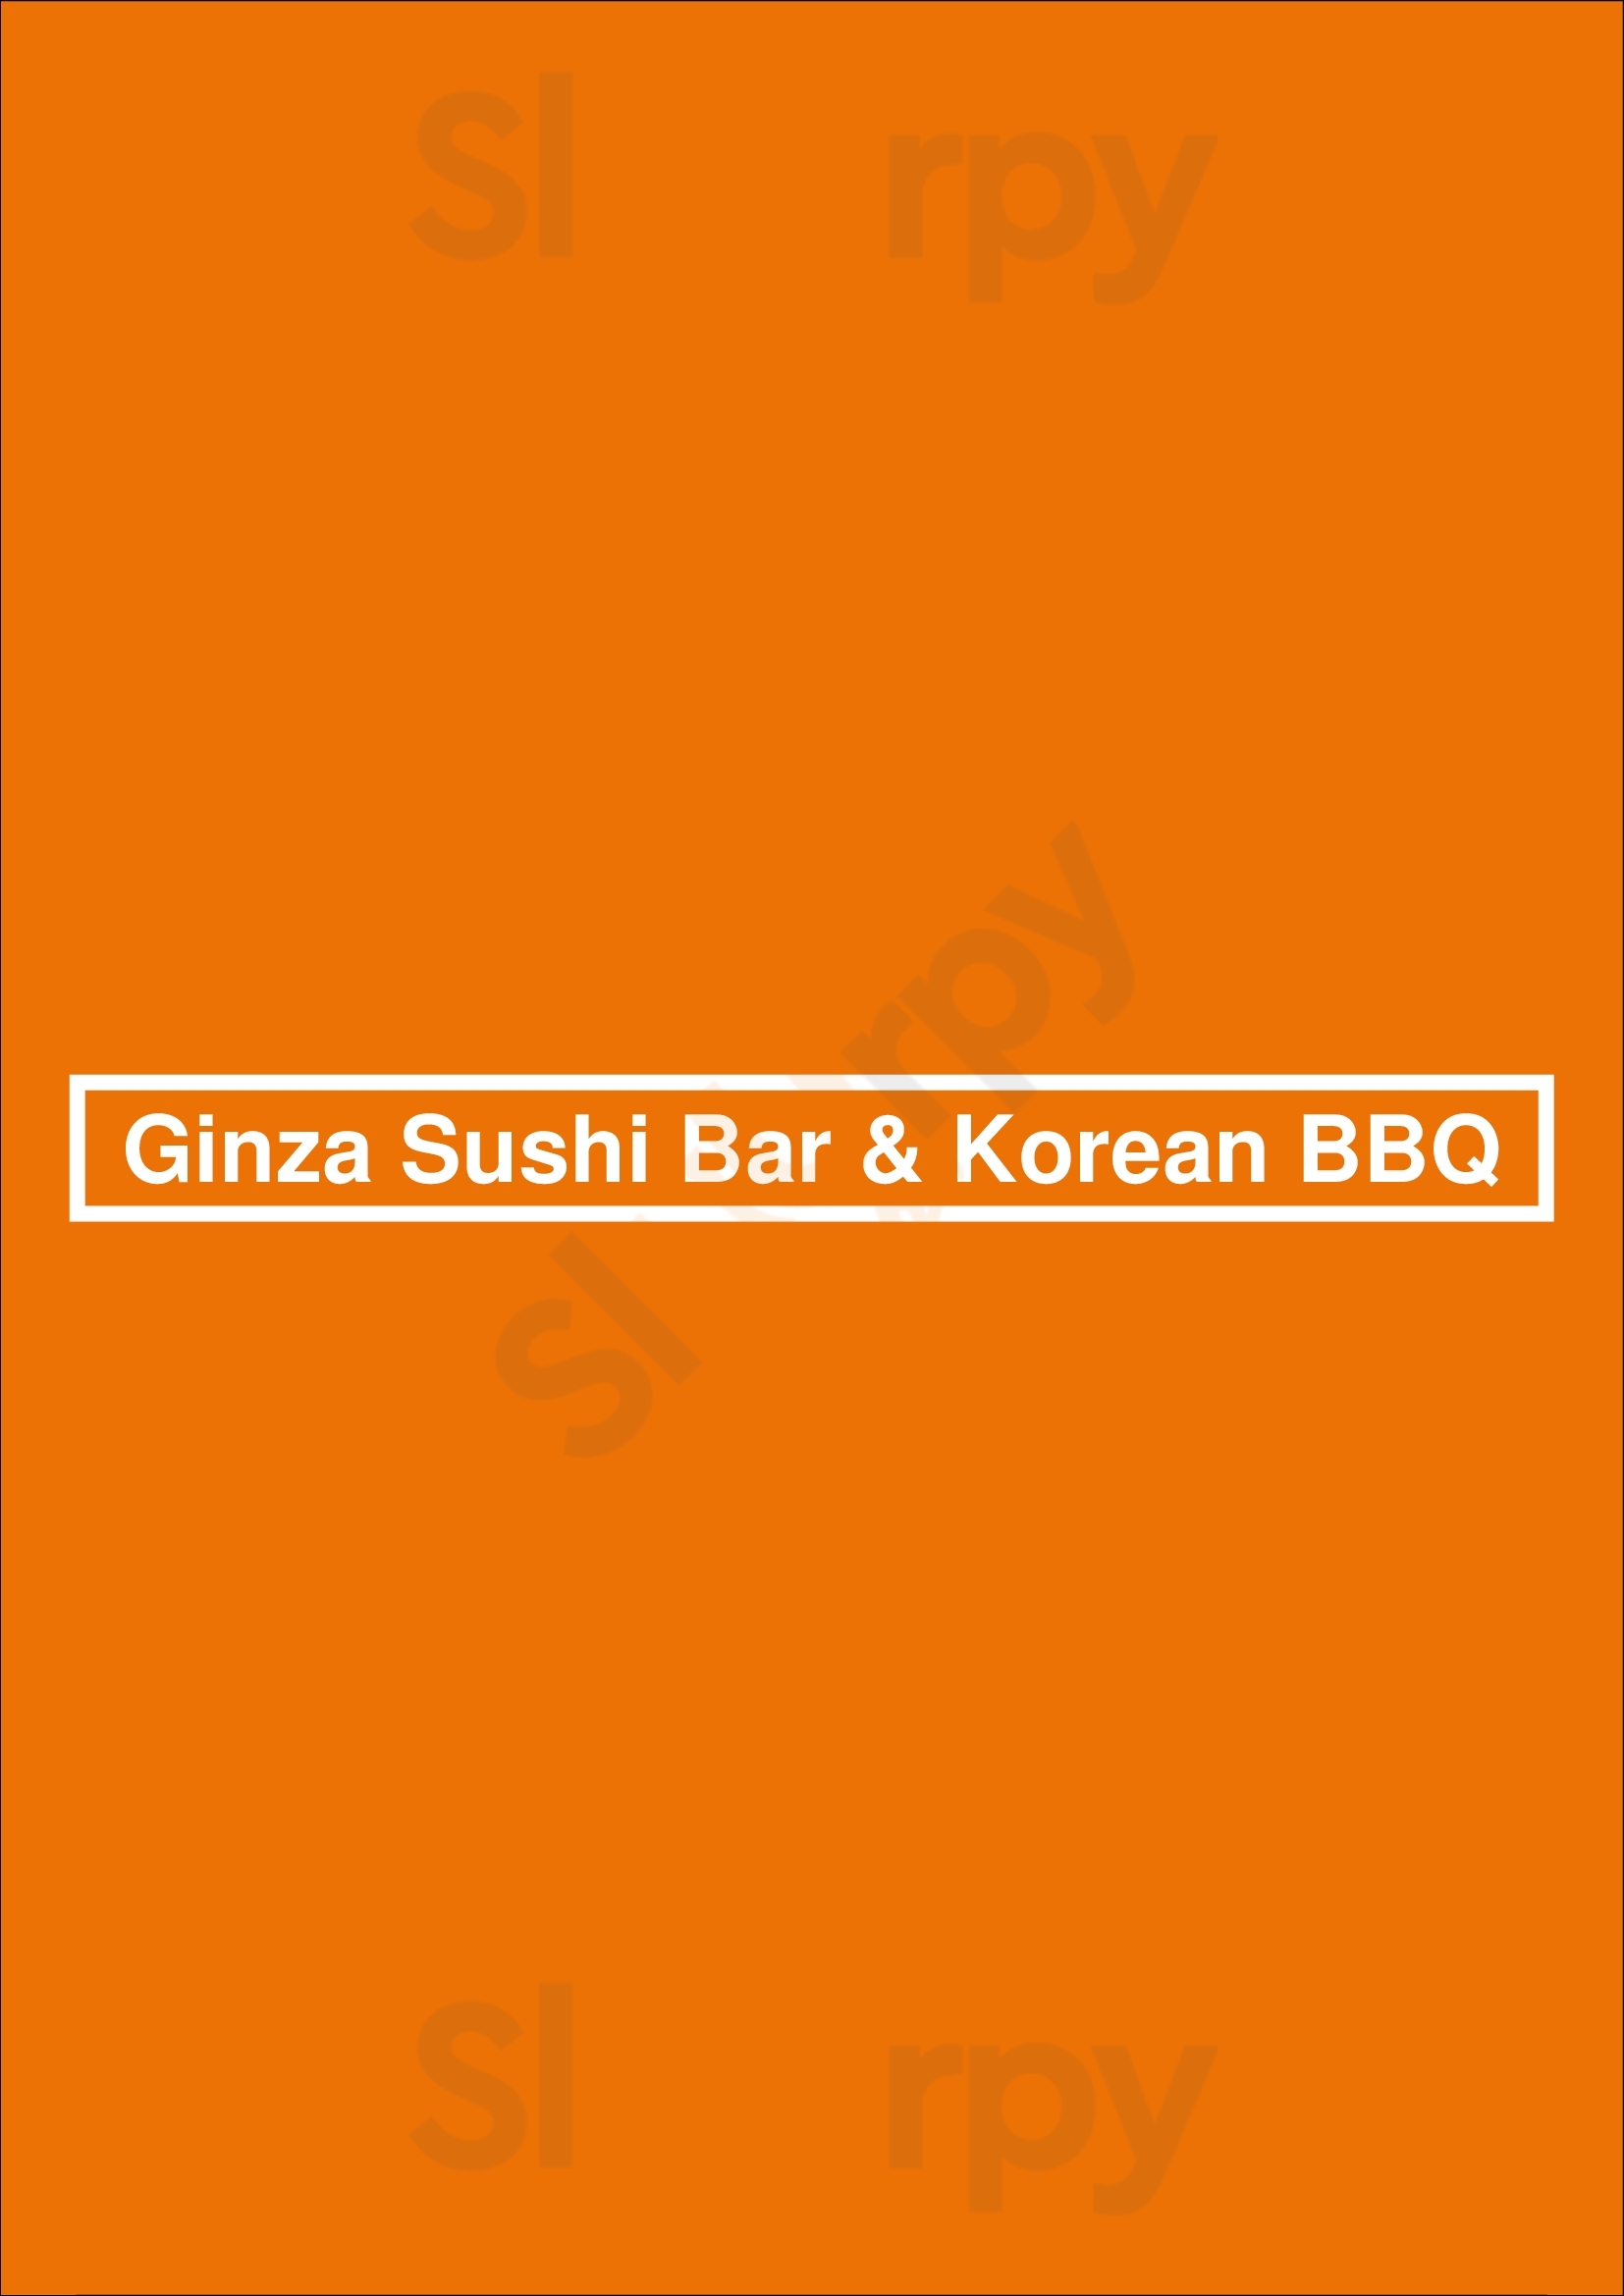 Ginza Sushi Bar & Korean Bbq Birmingham Menu - 1